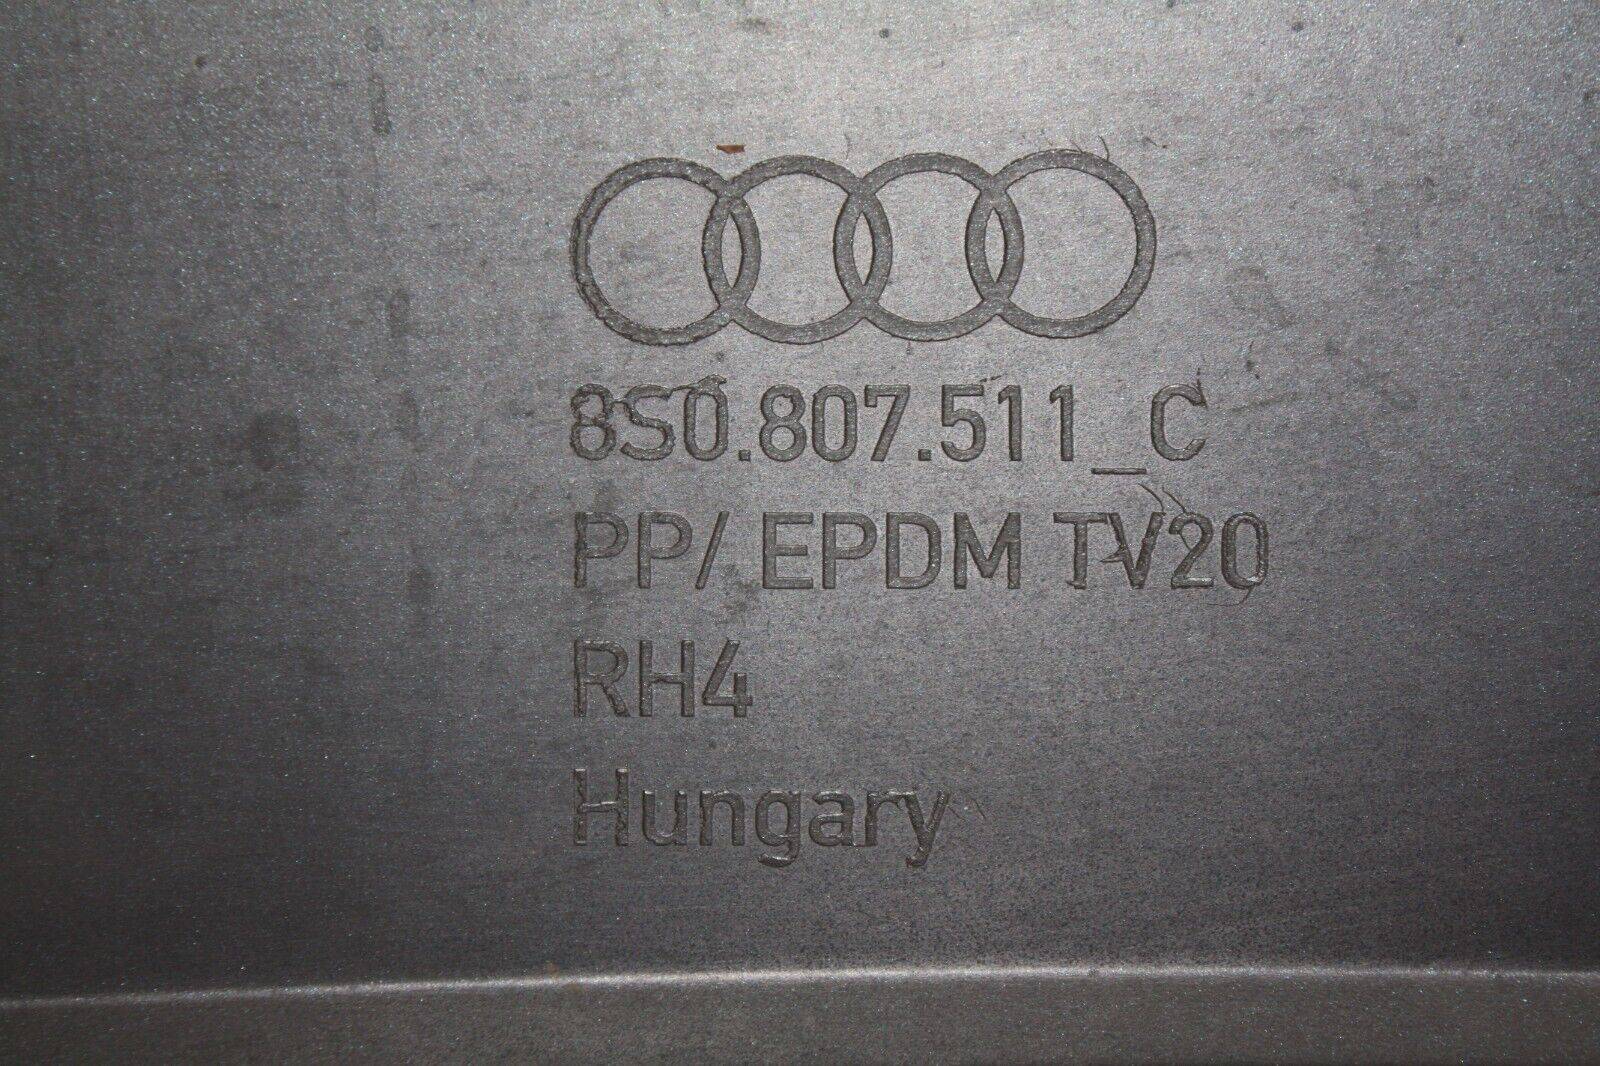 Audi-TT-S-Line-Rear-Bumper-2015-TO-2018-8S0807511C-Genuine-176003748651-11